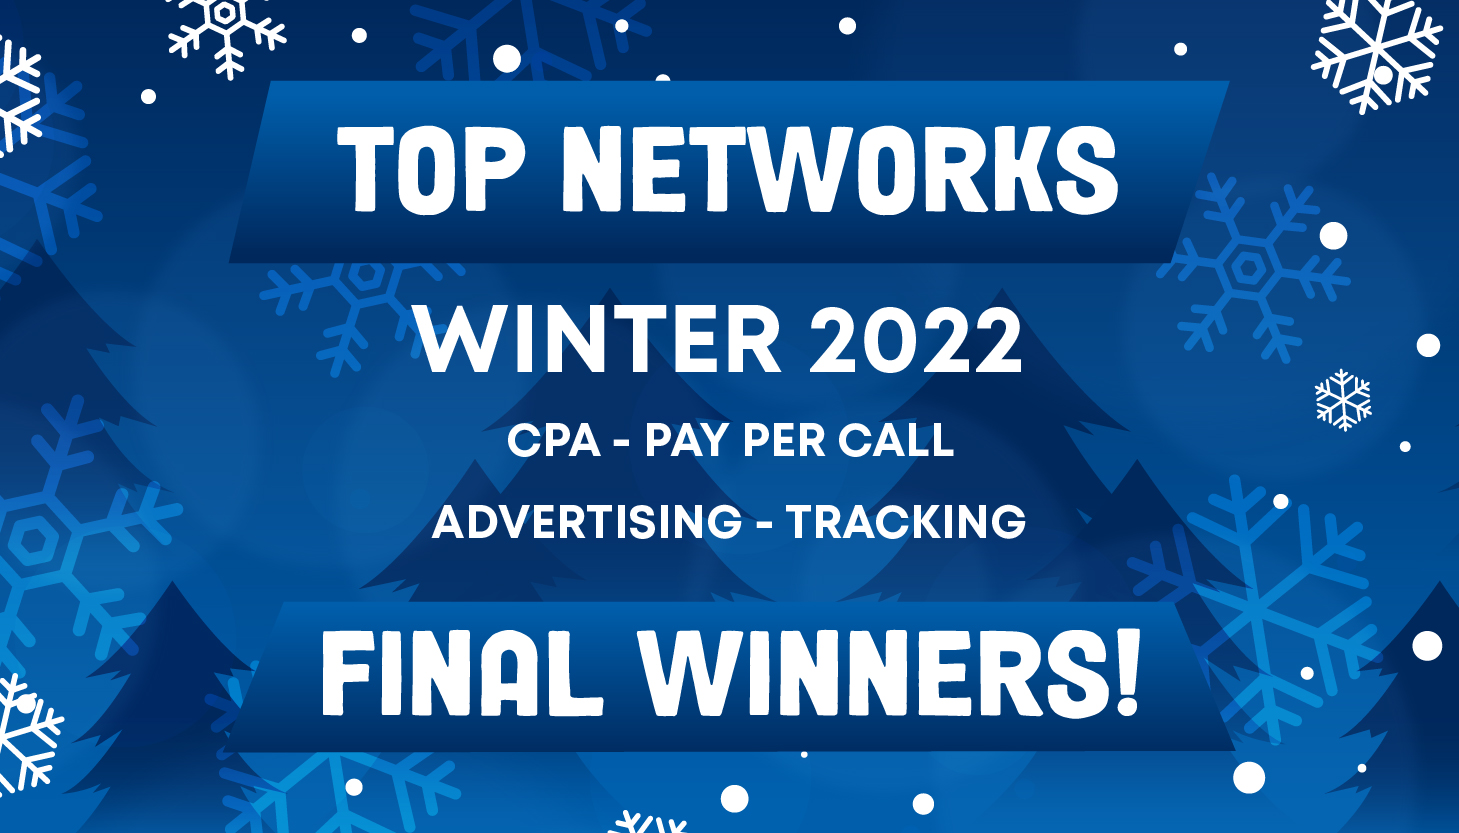 OfferVault Top Networks - Winter 2022 Winners